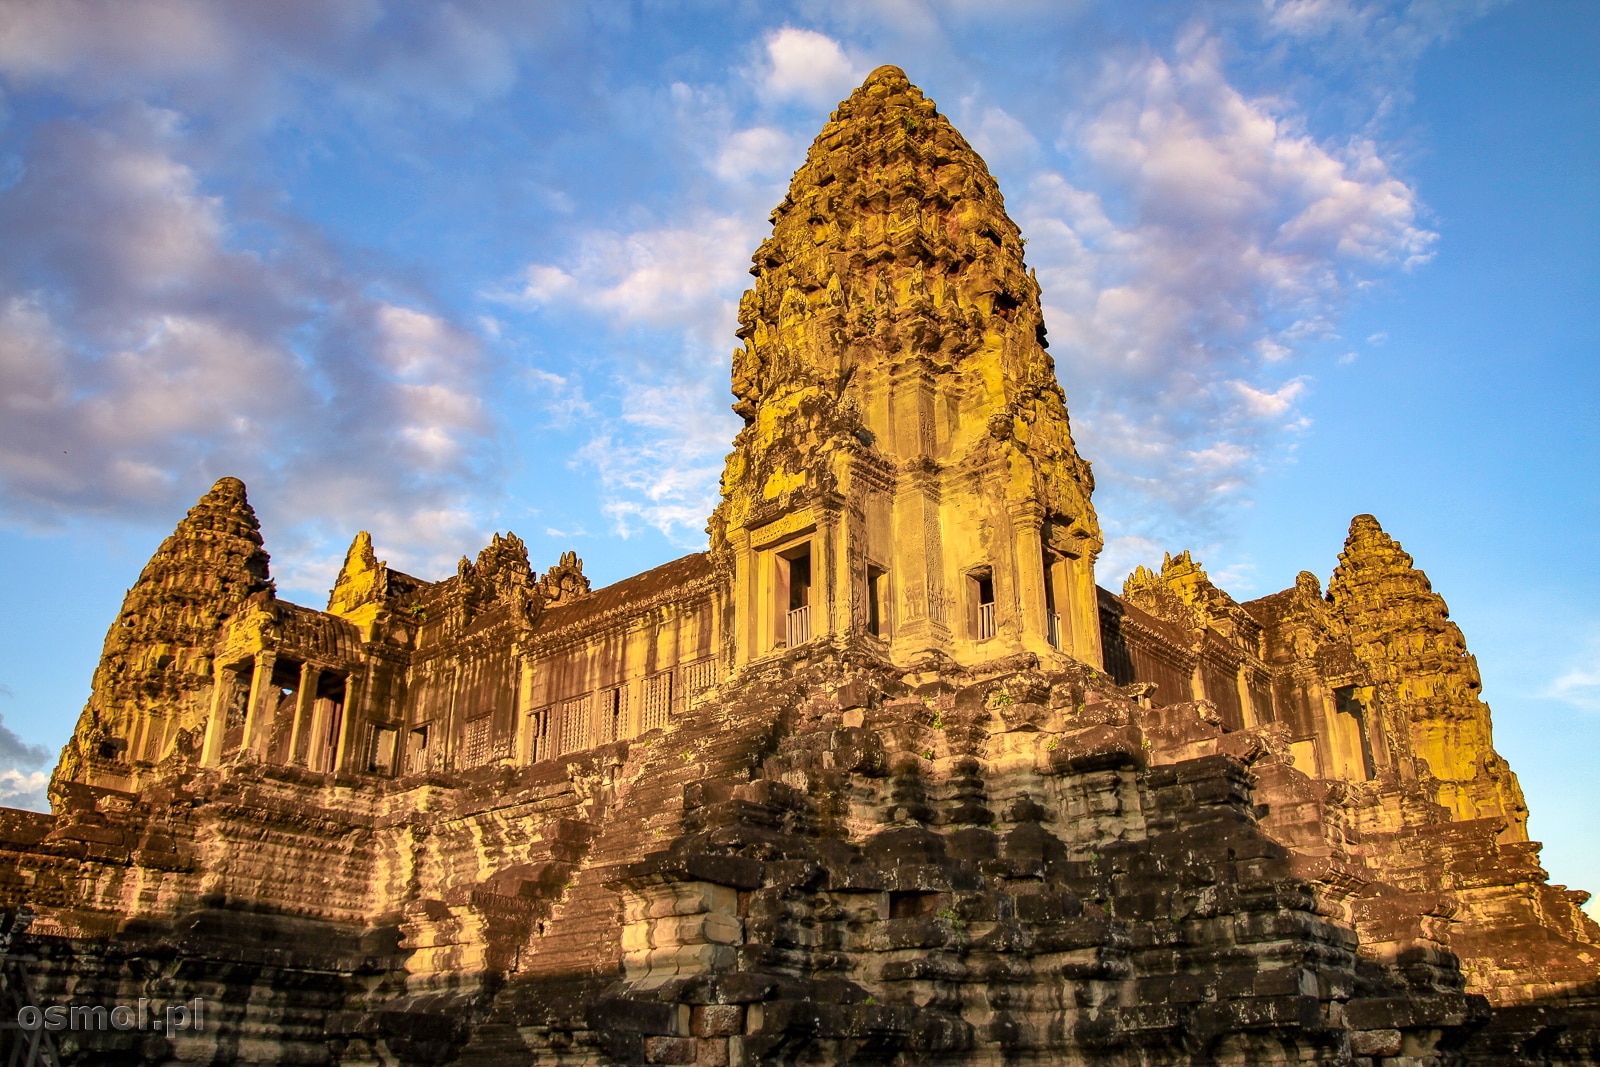 https://www.osmol.pl/wp-content/uploads/2016/01/Angkor-Wat-wieze-w-ksztalcie-tiary.jpg